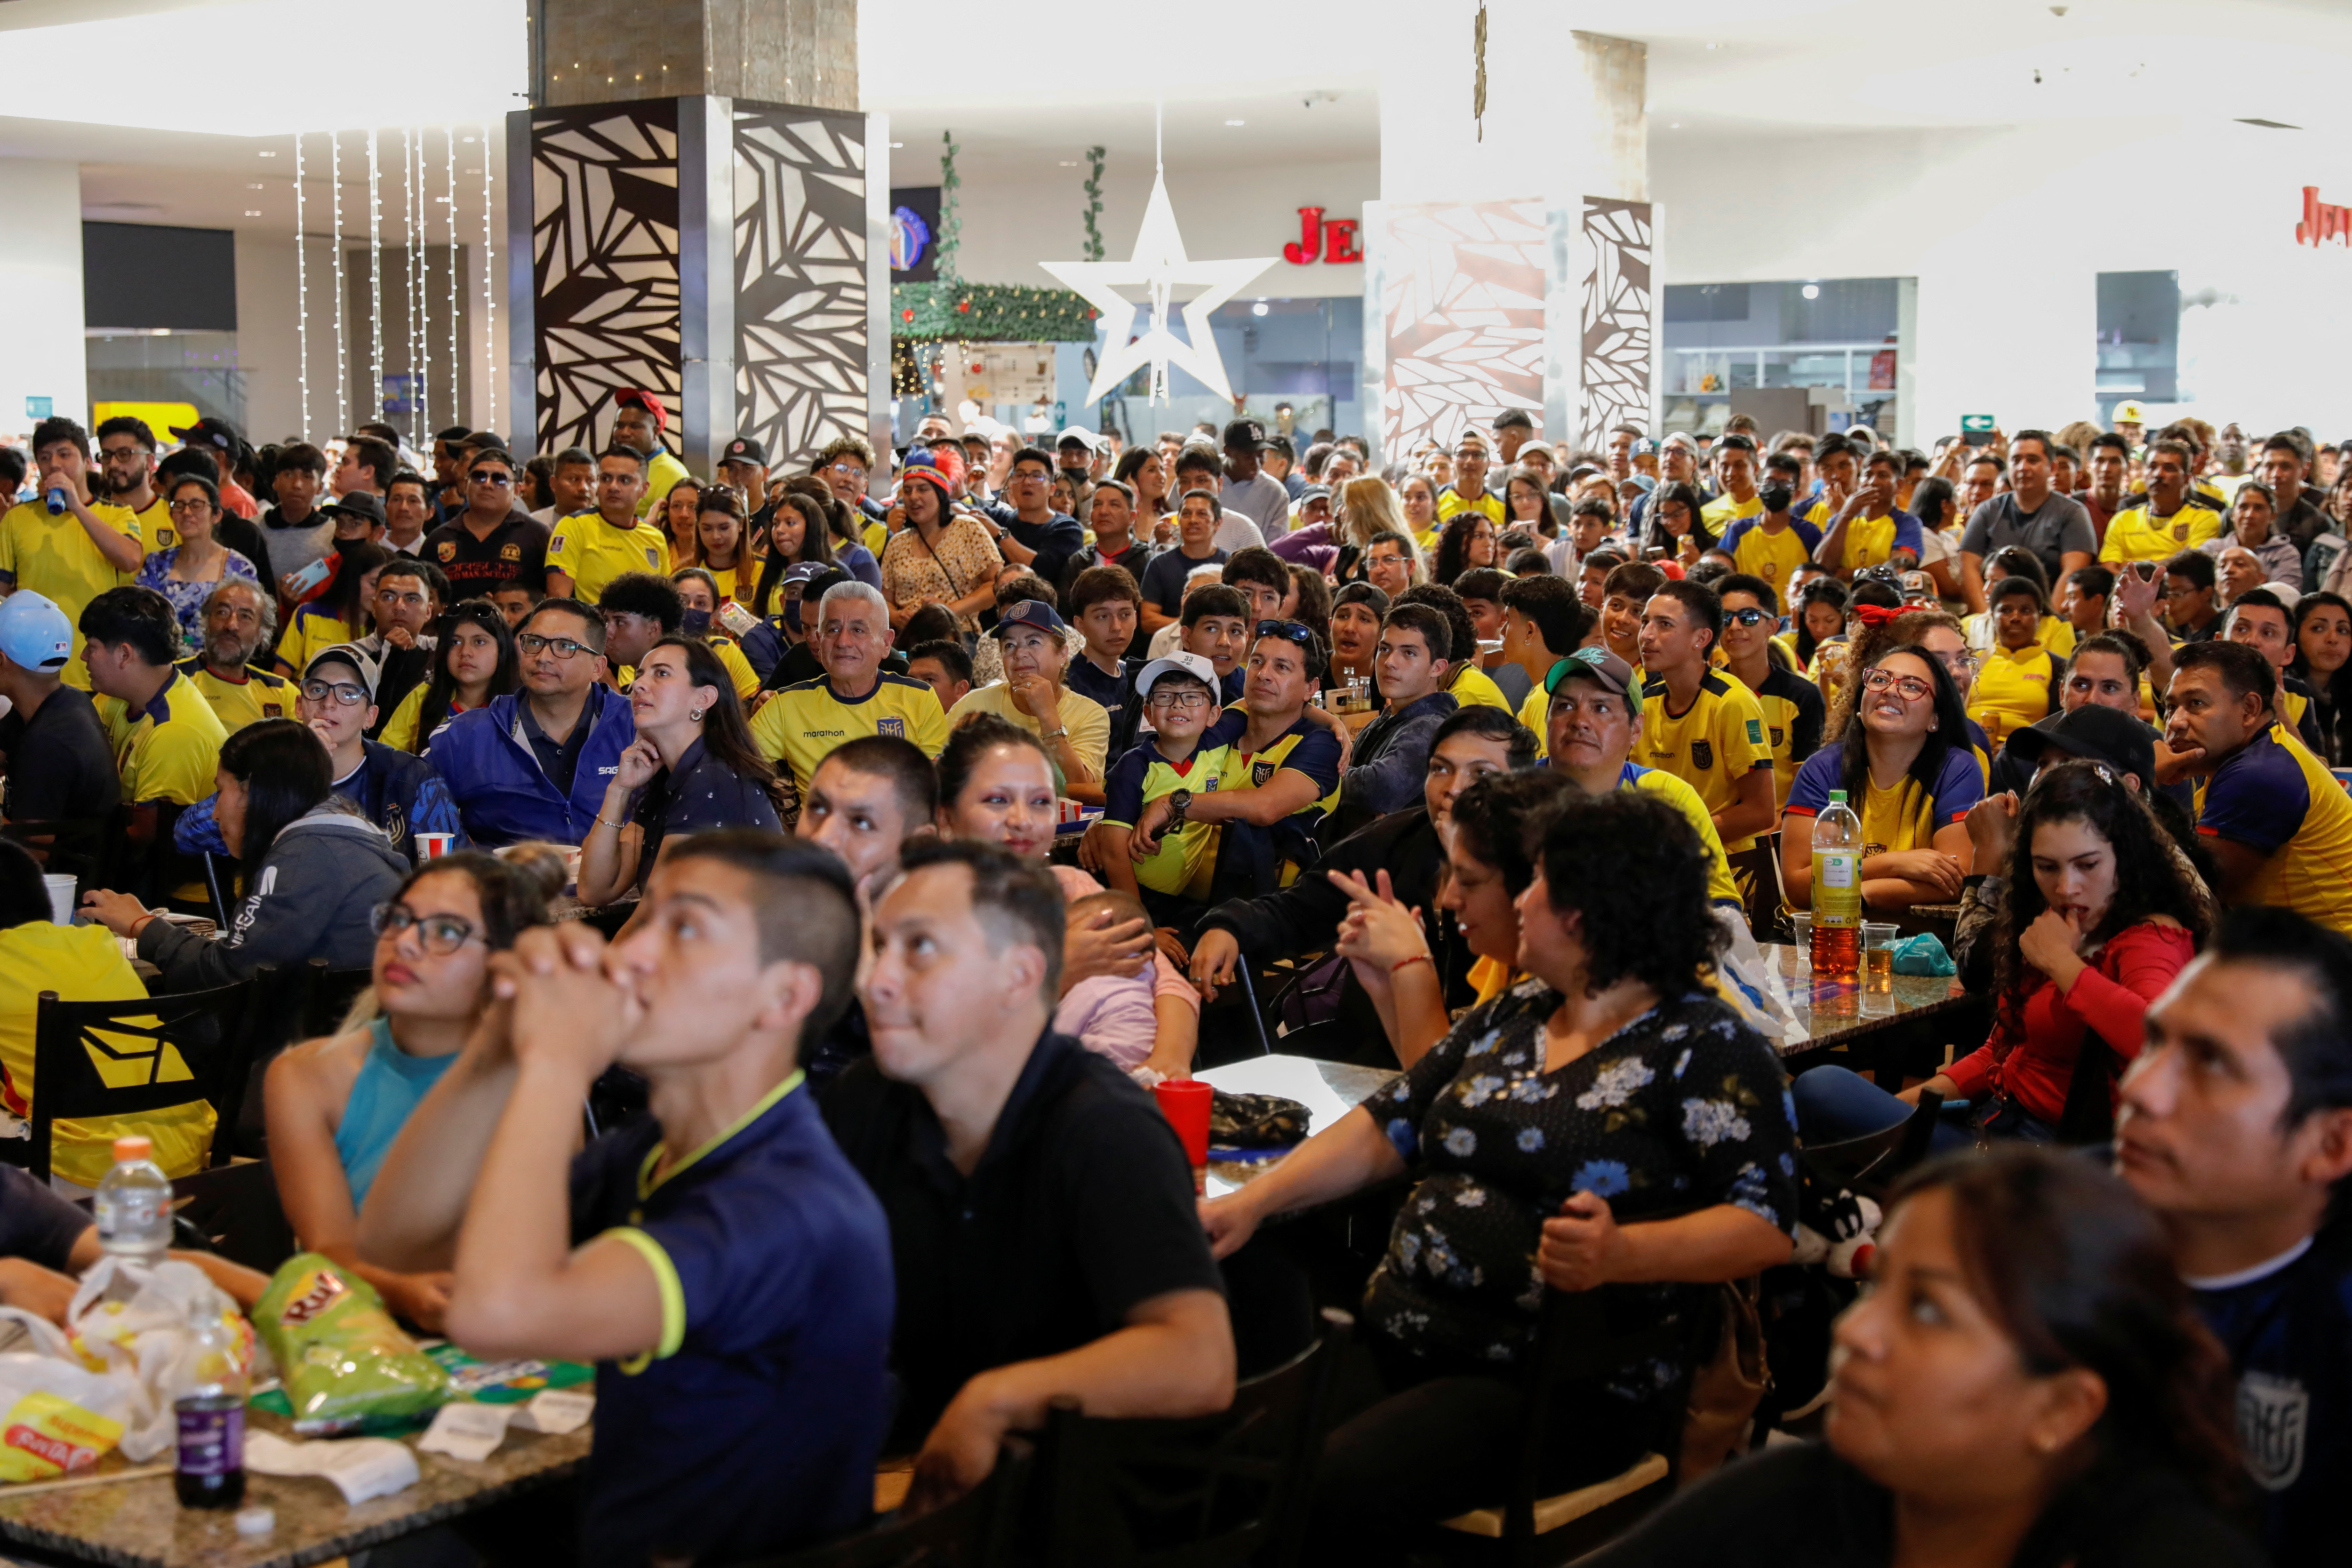 Fans watch the open match Qatar v Ecuador during the FIFA World Cup Qatar 2022 in Ibarra, Ecuador